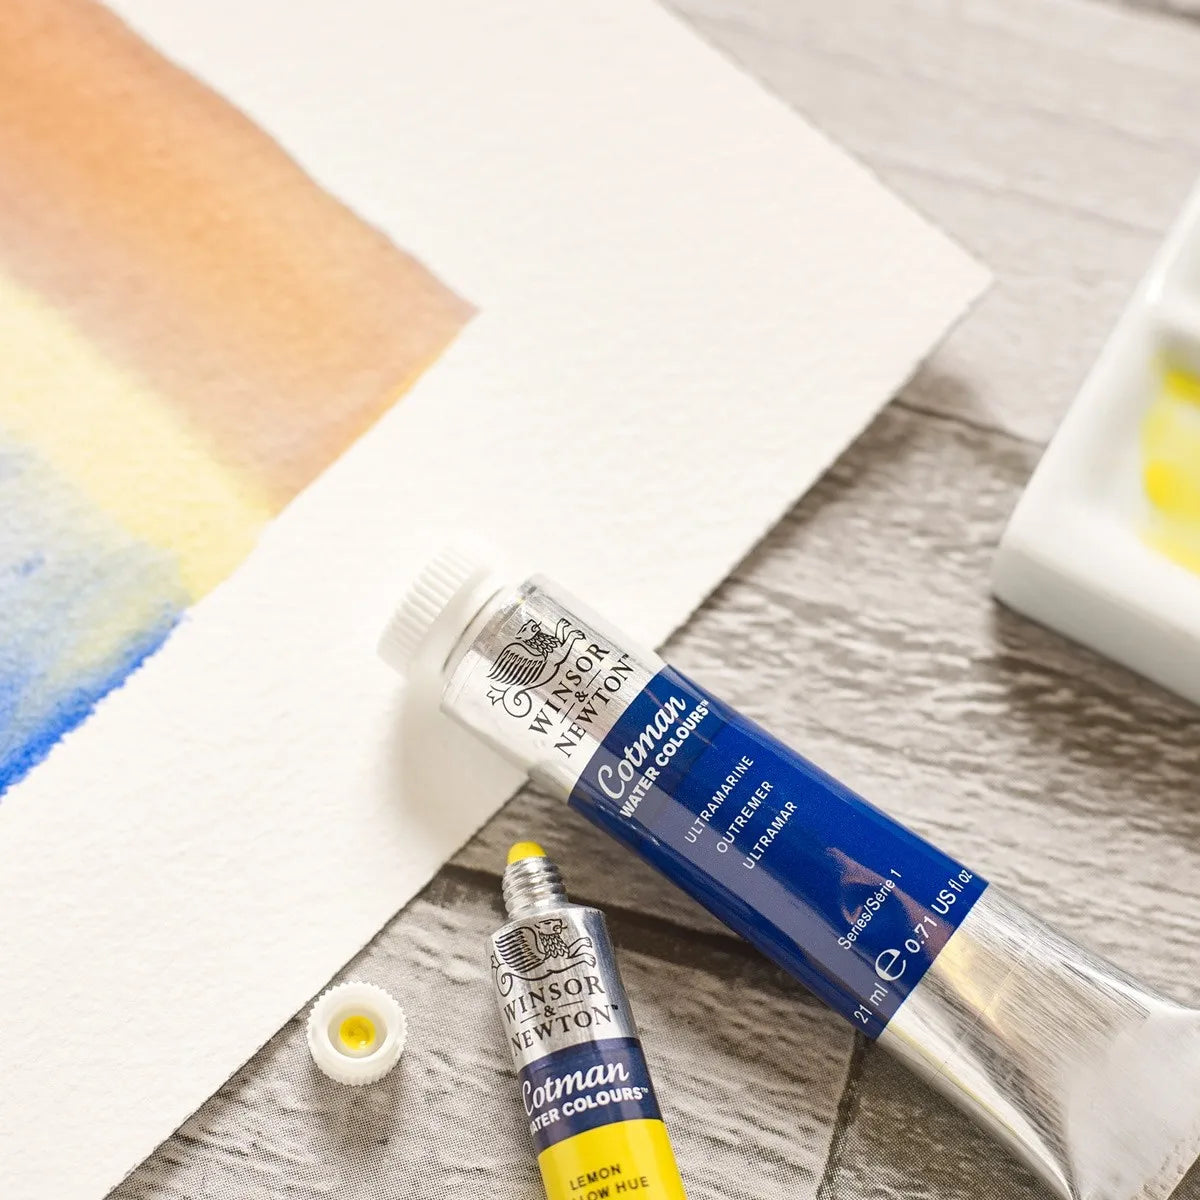 Winsor & Newton Cotman Watercolor Paint Set, 10/20 Colors, 5ml Tube Water  Color Painting Art Painting Supplies